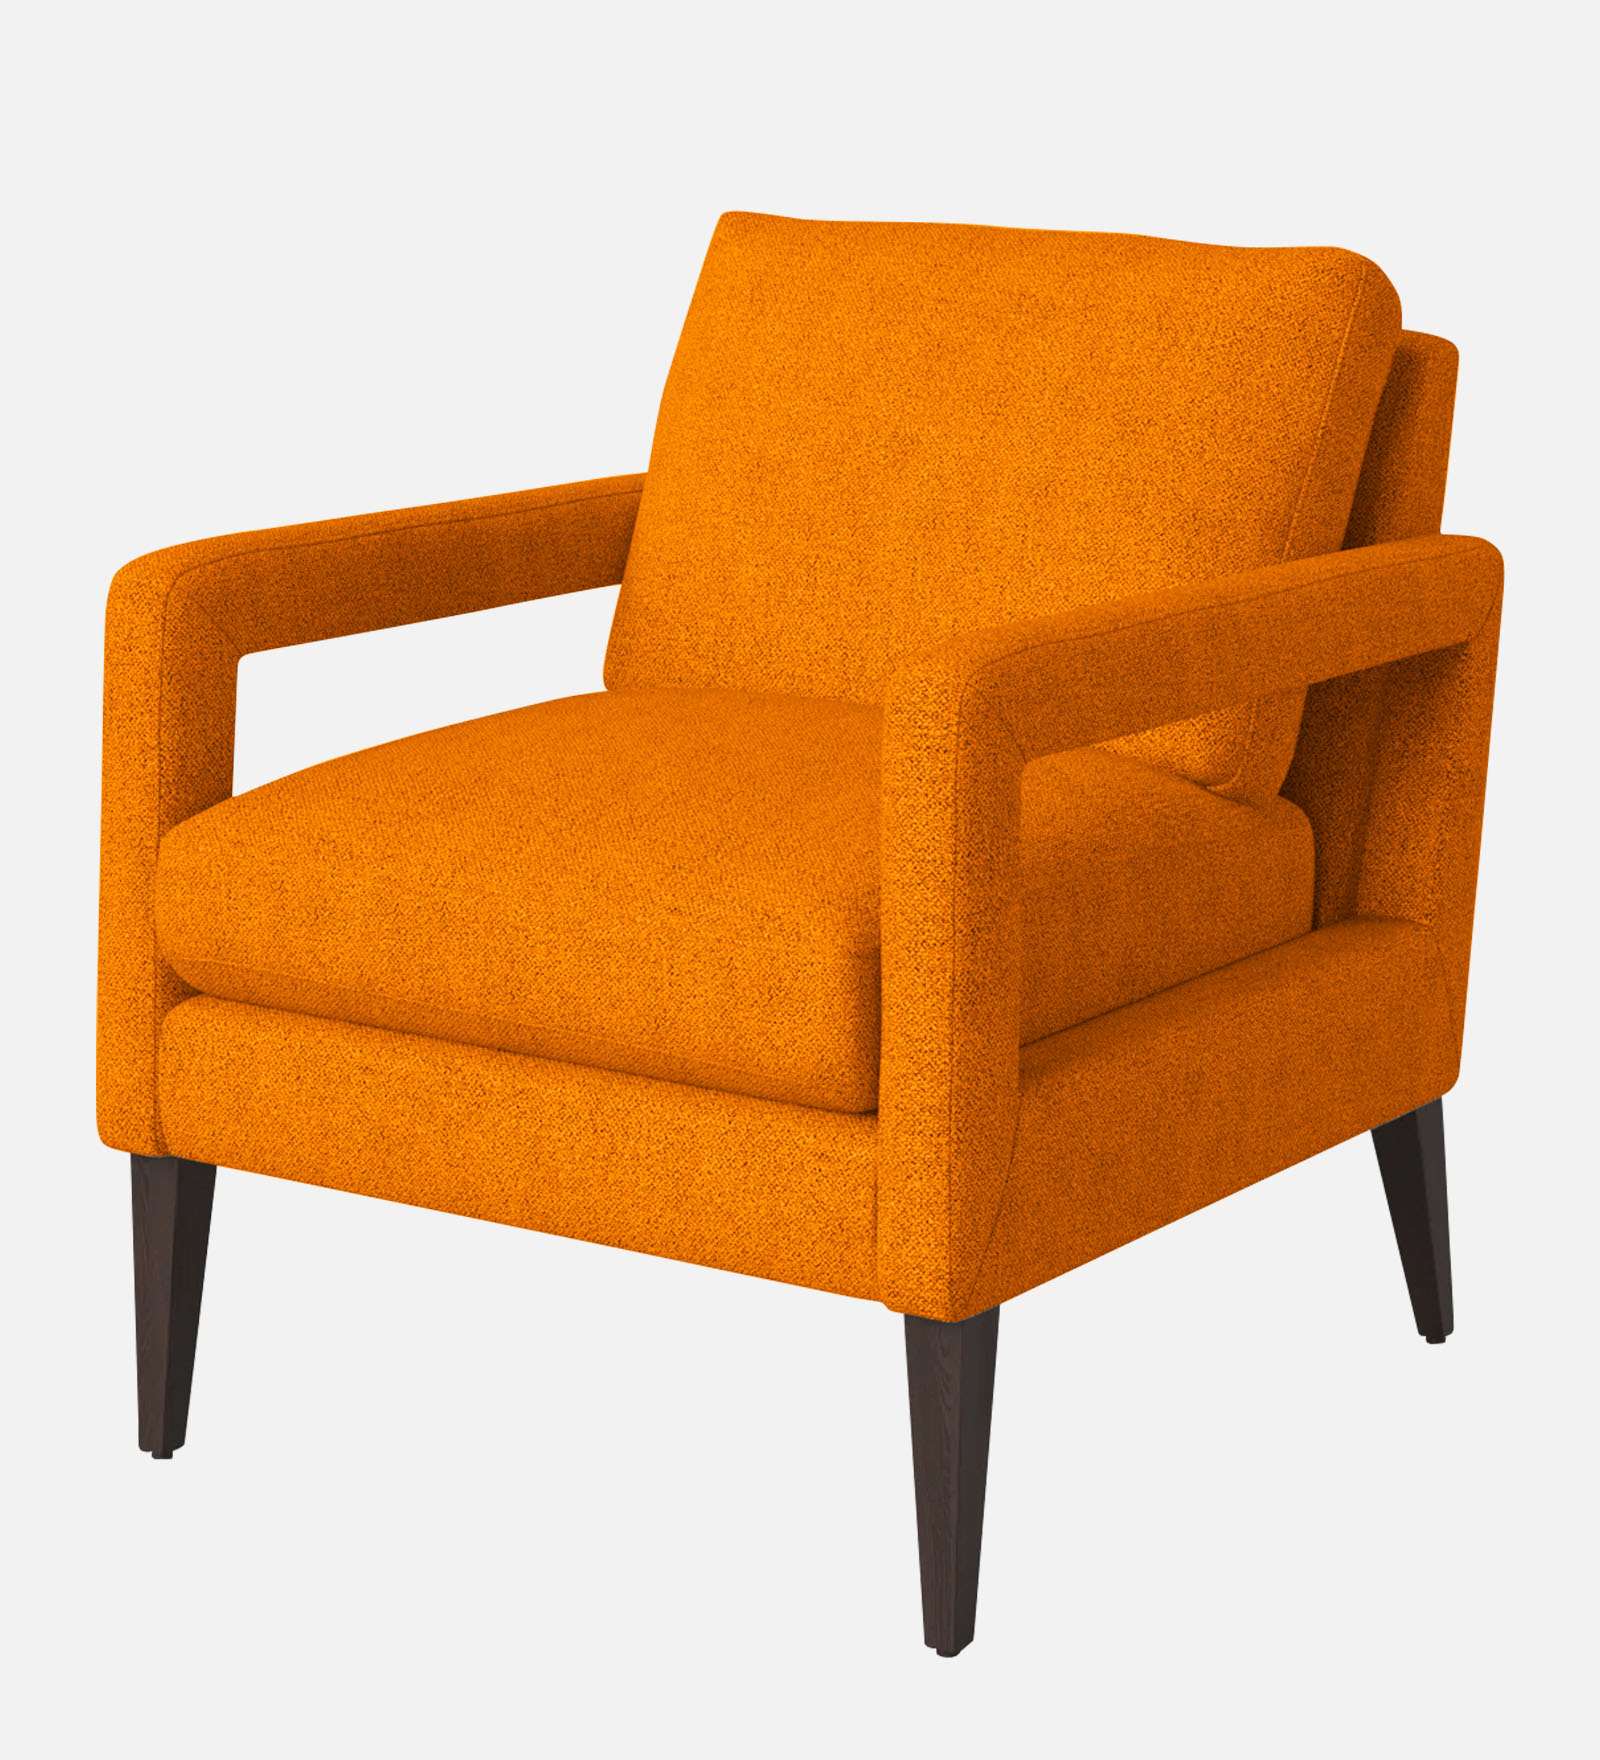 Olsen Fabric Arm Chair in Vivid Orange Colour